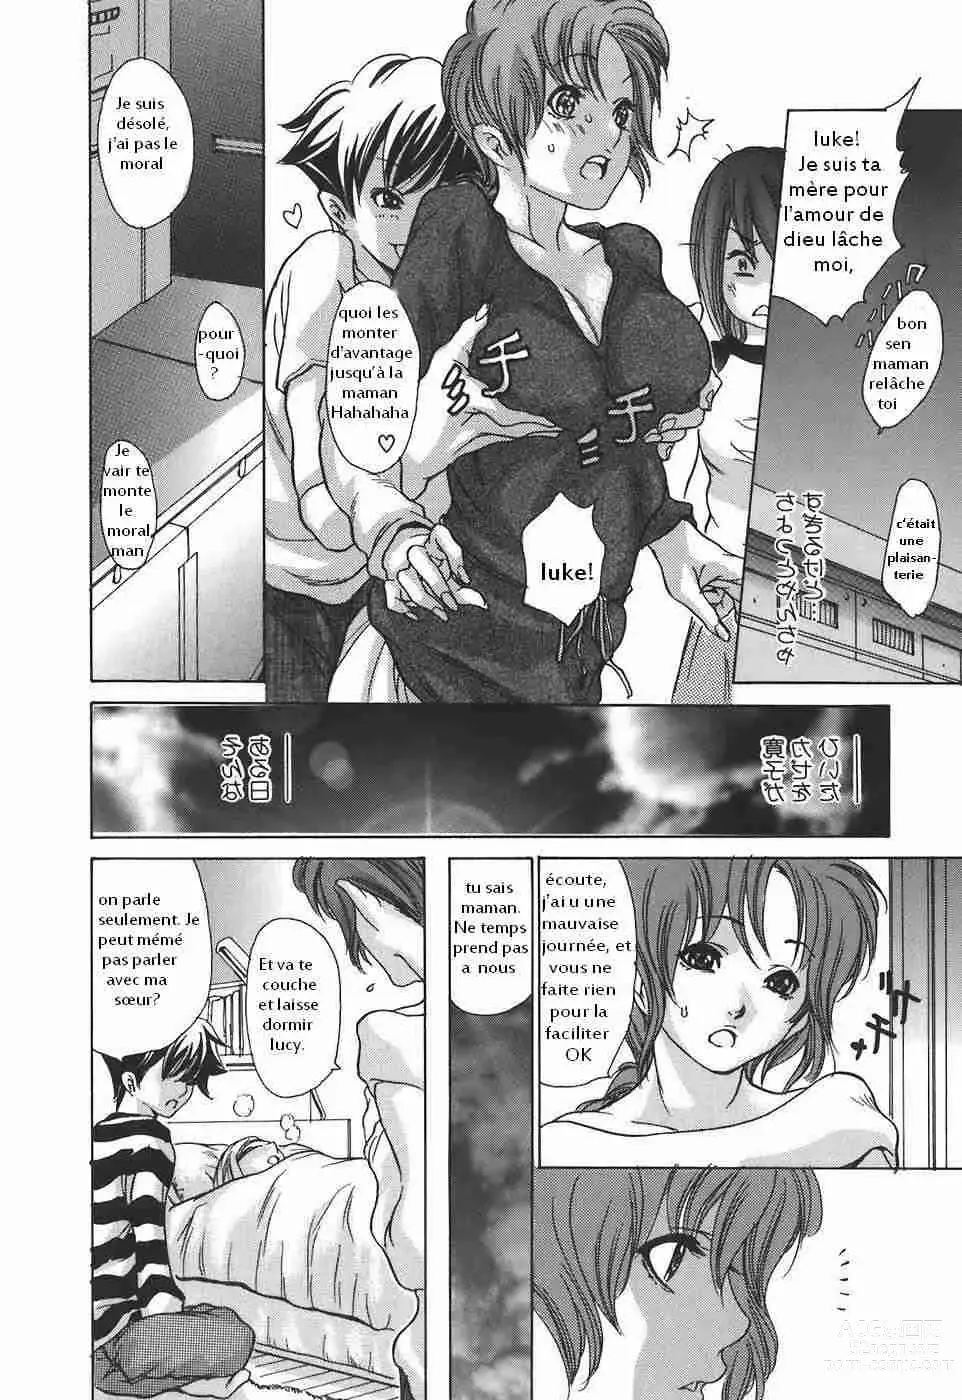 Page 3 of manga le chantage a maman